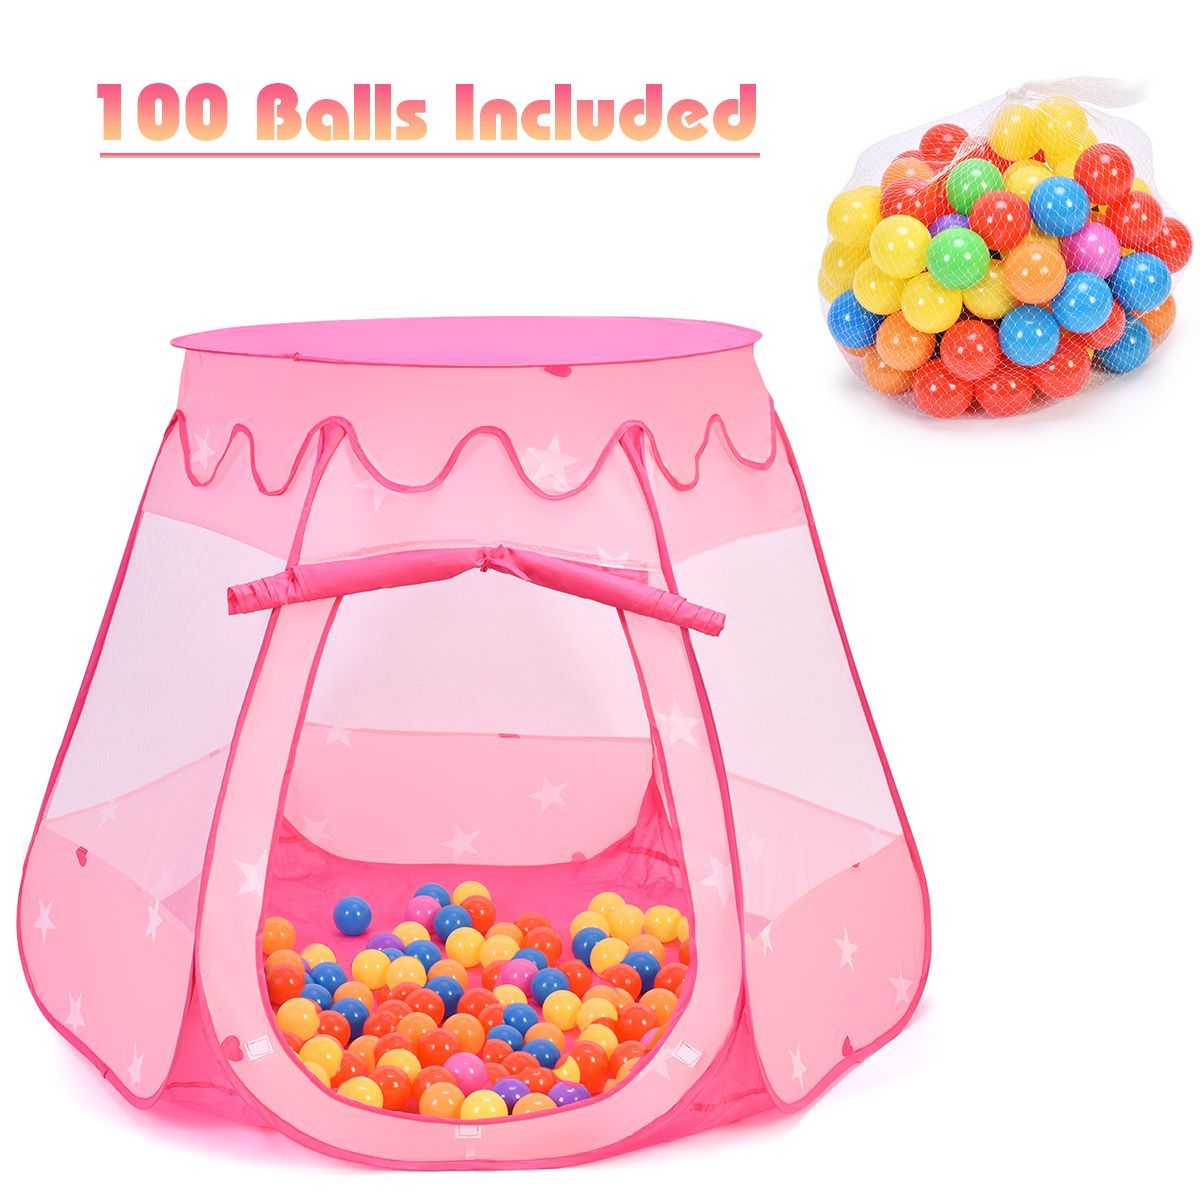 Costway Kid Outdoor Indoor Princess Play Tent Playhouse Ball Tent Toddler Toys w/ 100 Balls | Target